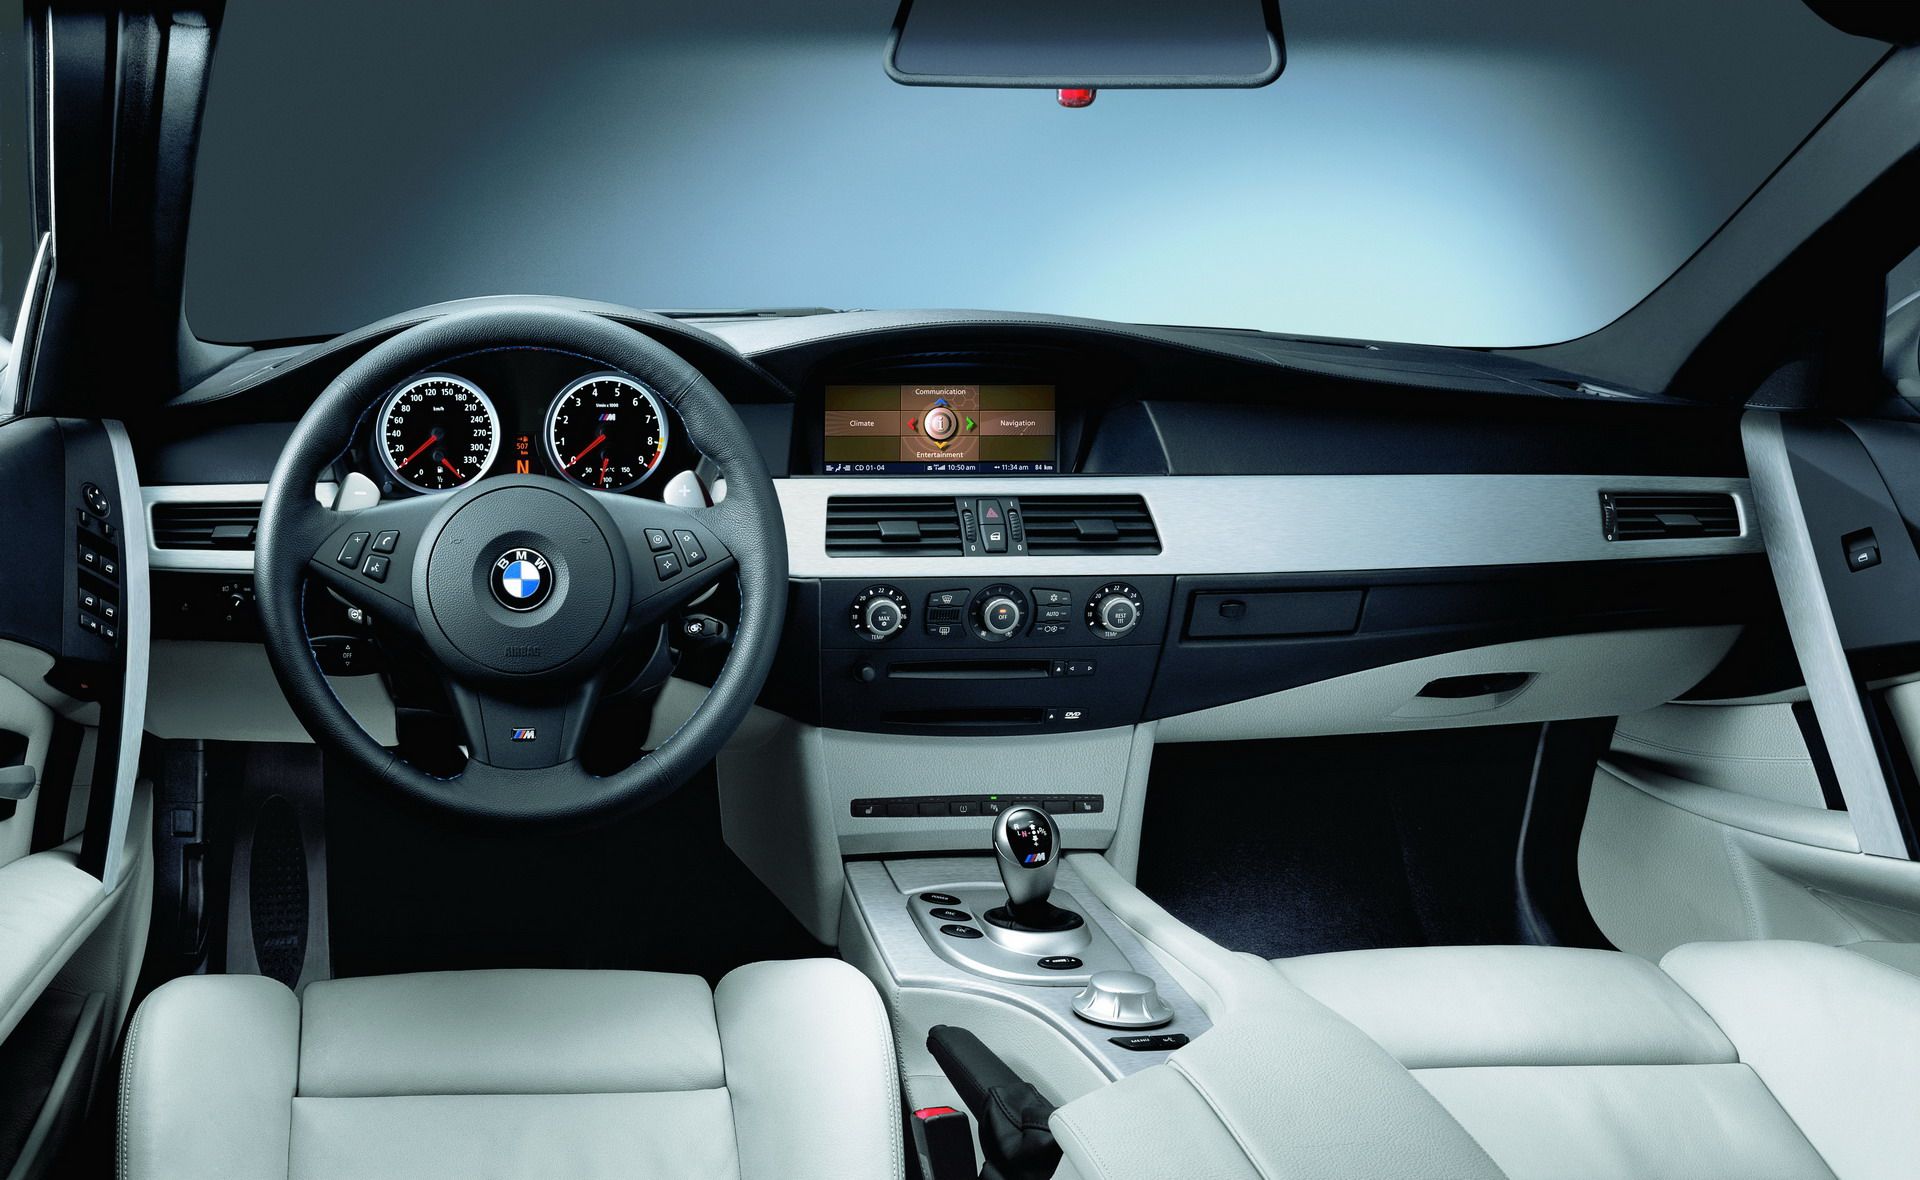 2005 BMW M5 Sedan interior